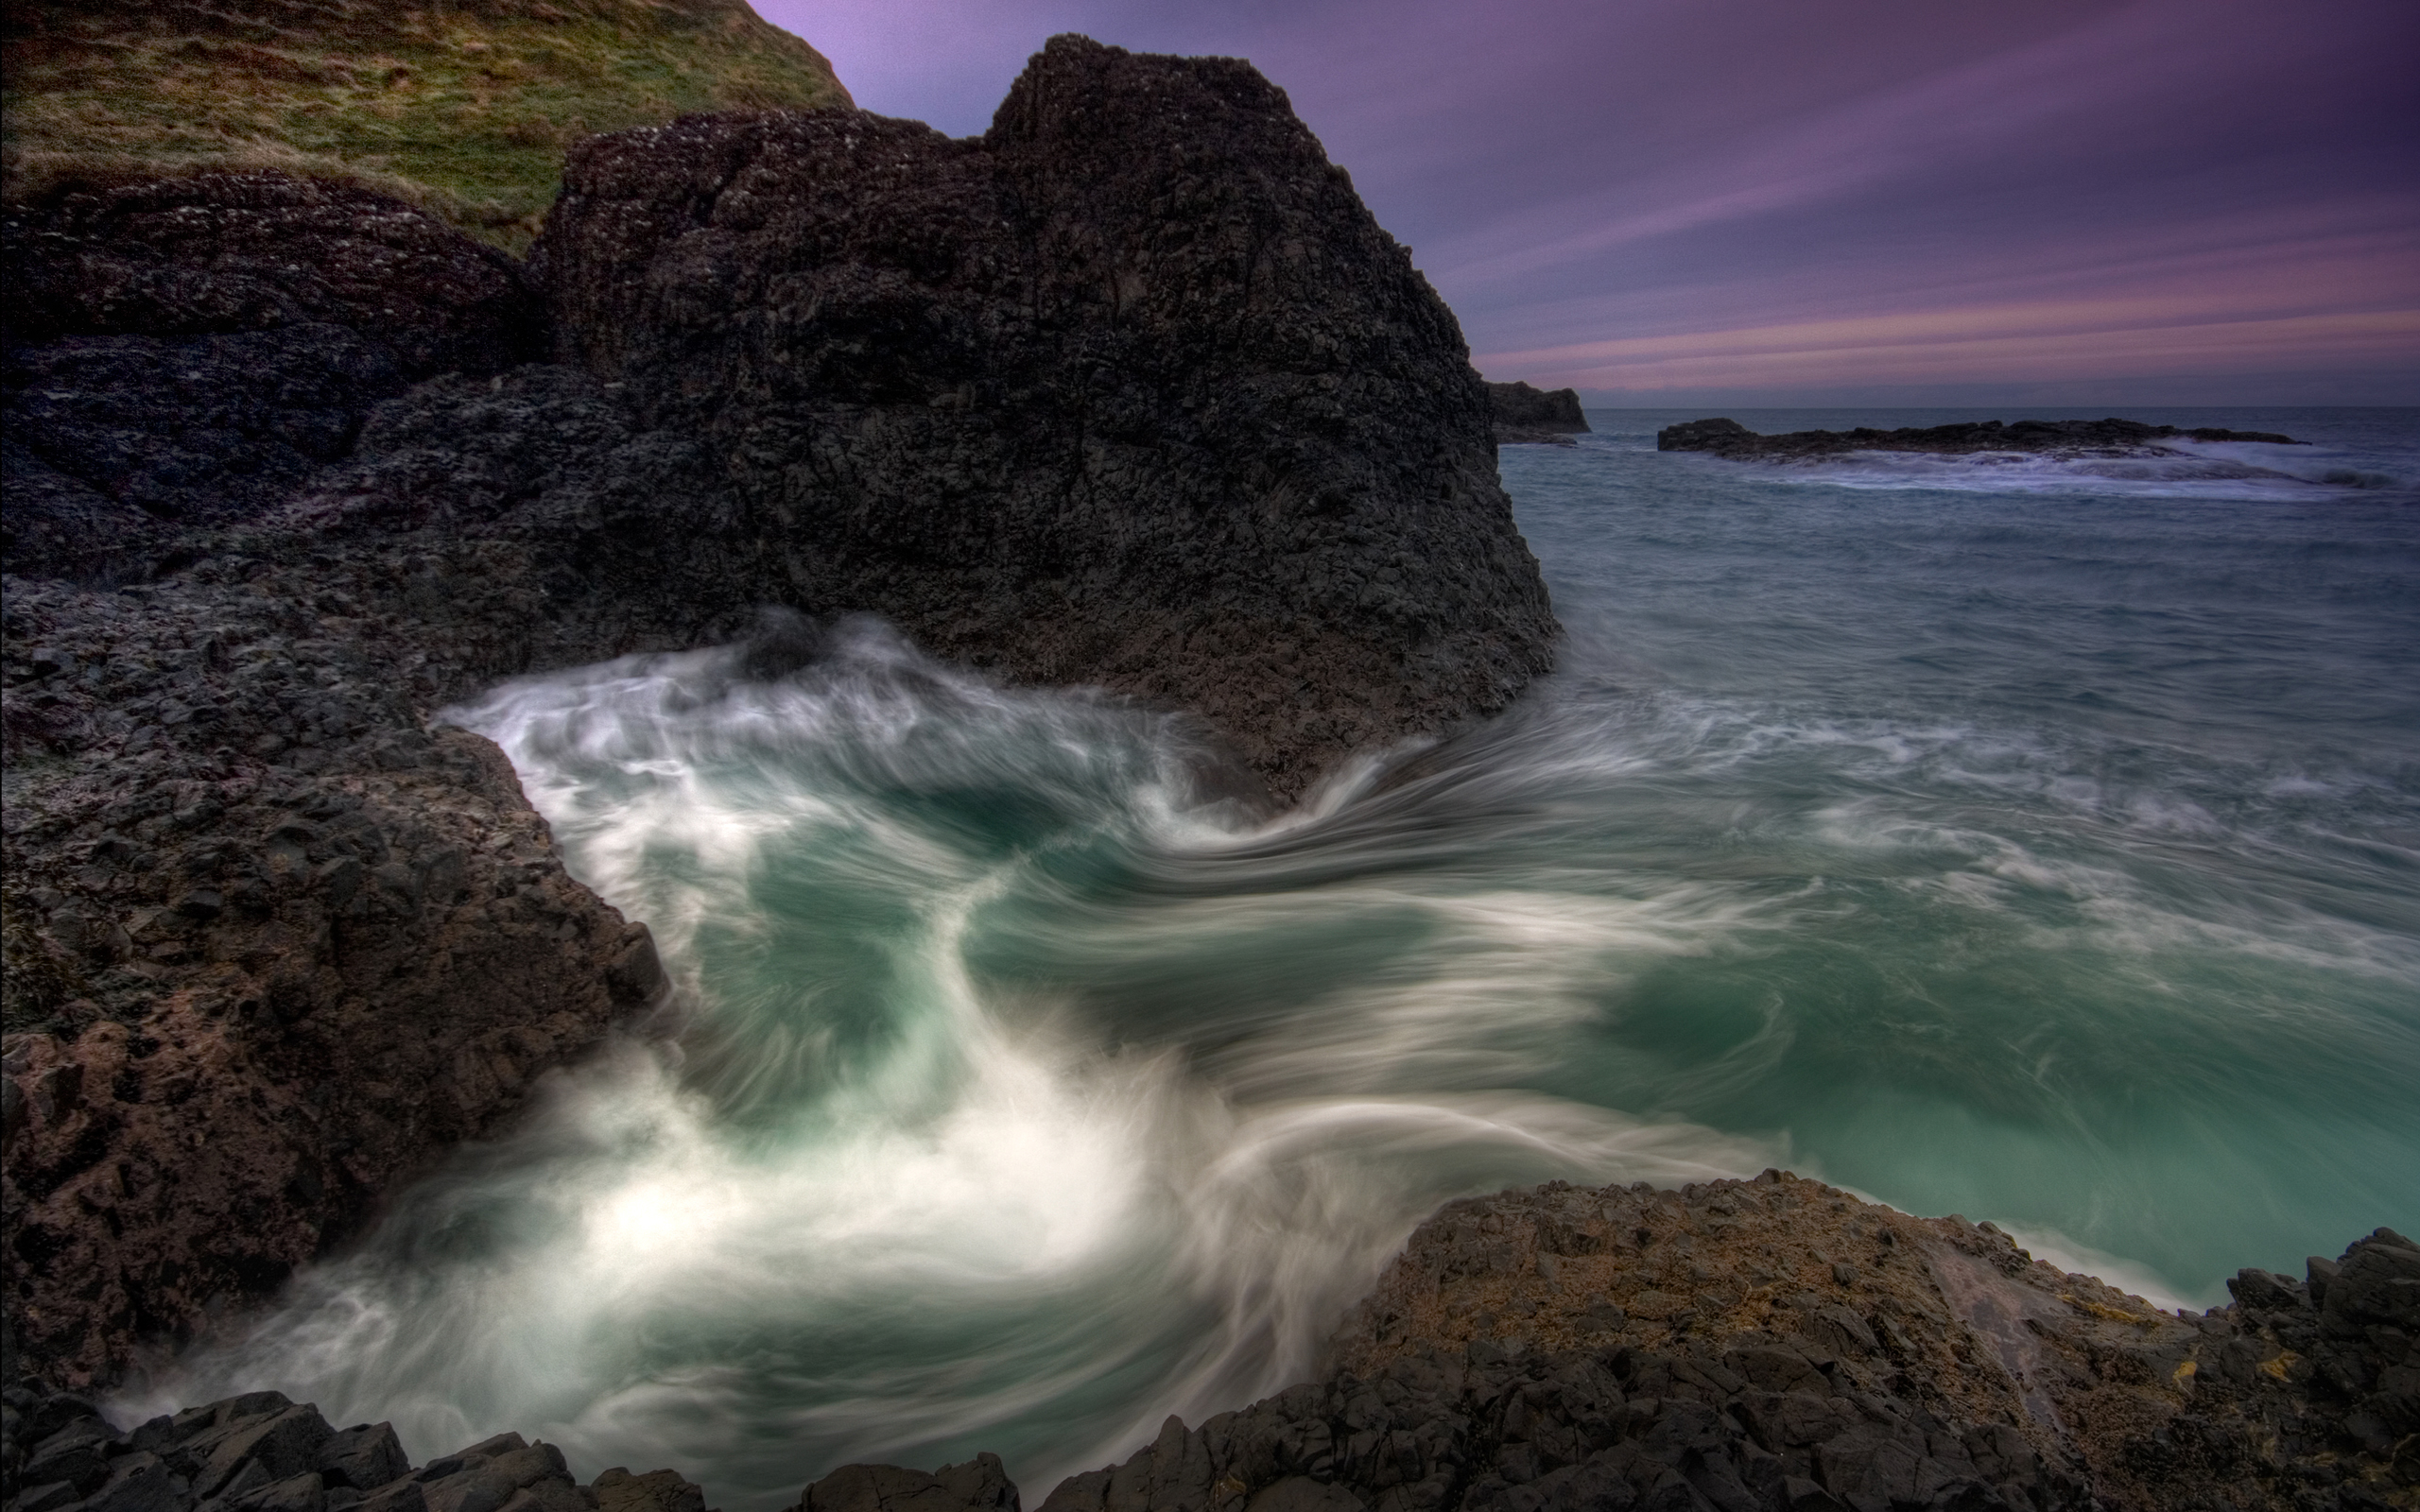 Coastal sunset in Ireland with a rushing wave crashing against the shore at dusk.